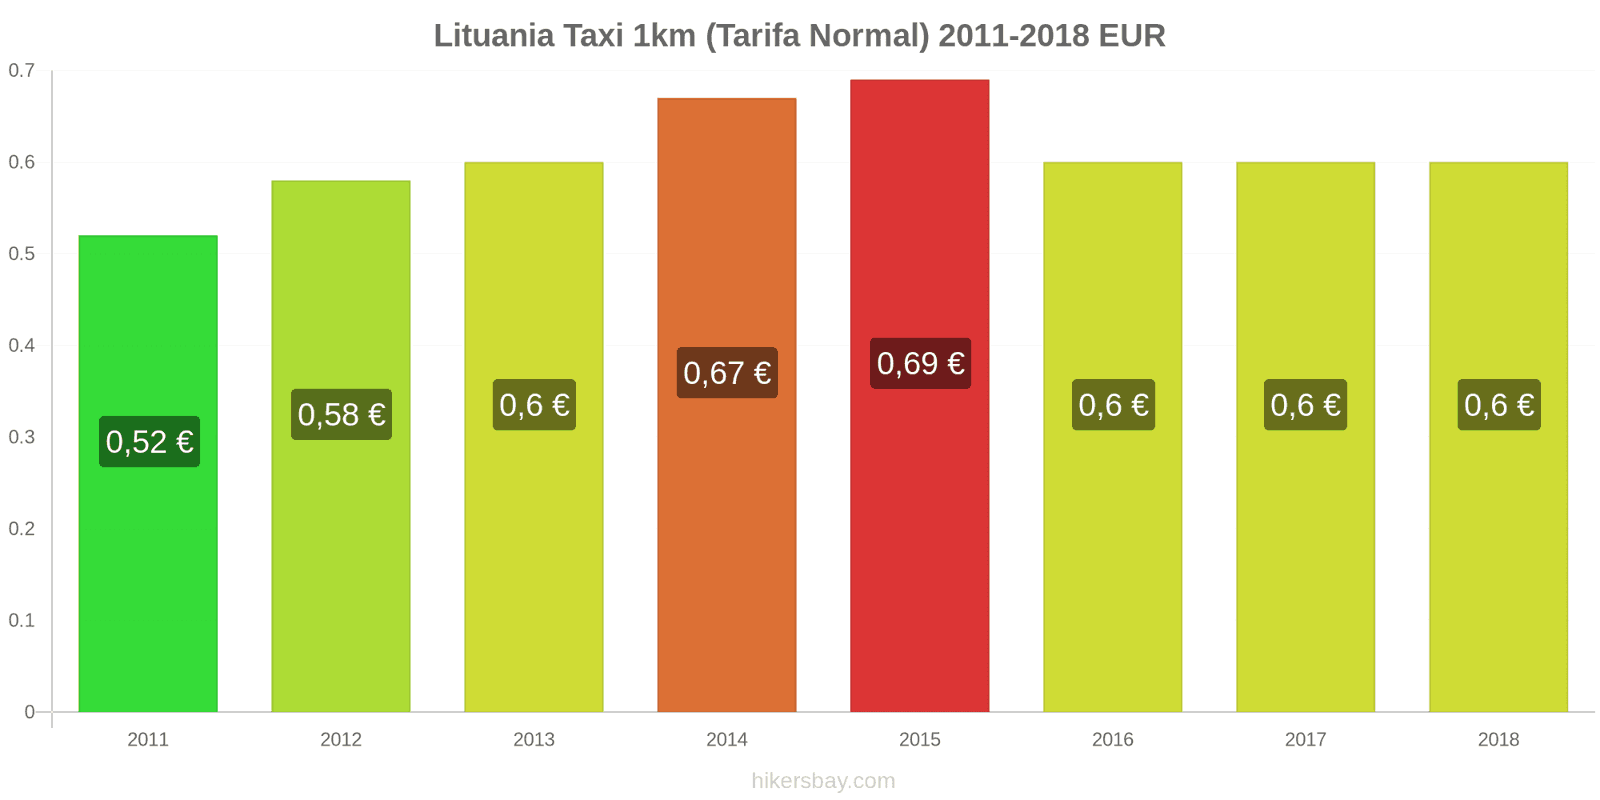 Lituania cambios de precios Taxi 1km (tarifa normal) hikersbay.com